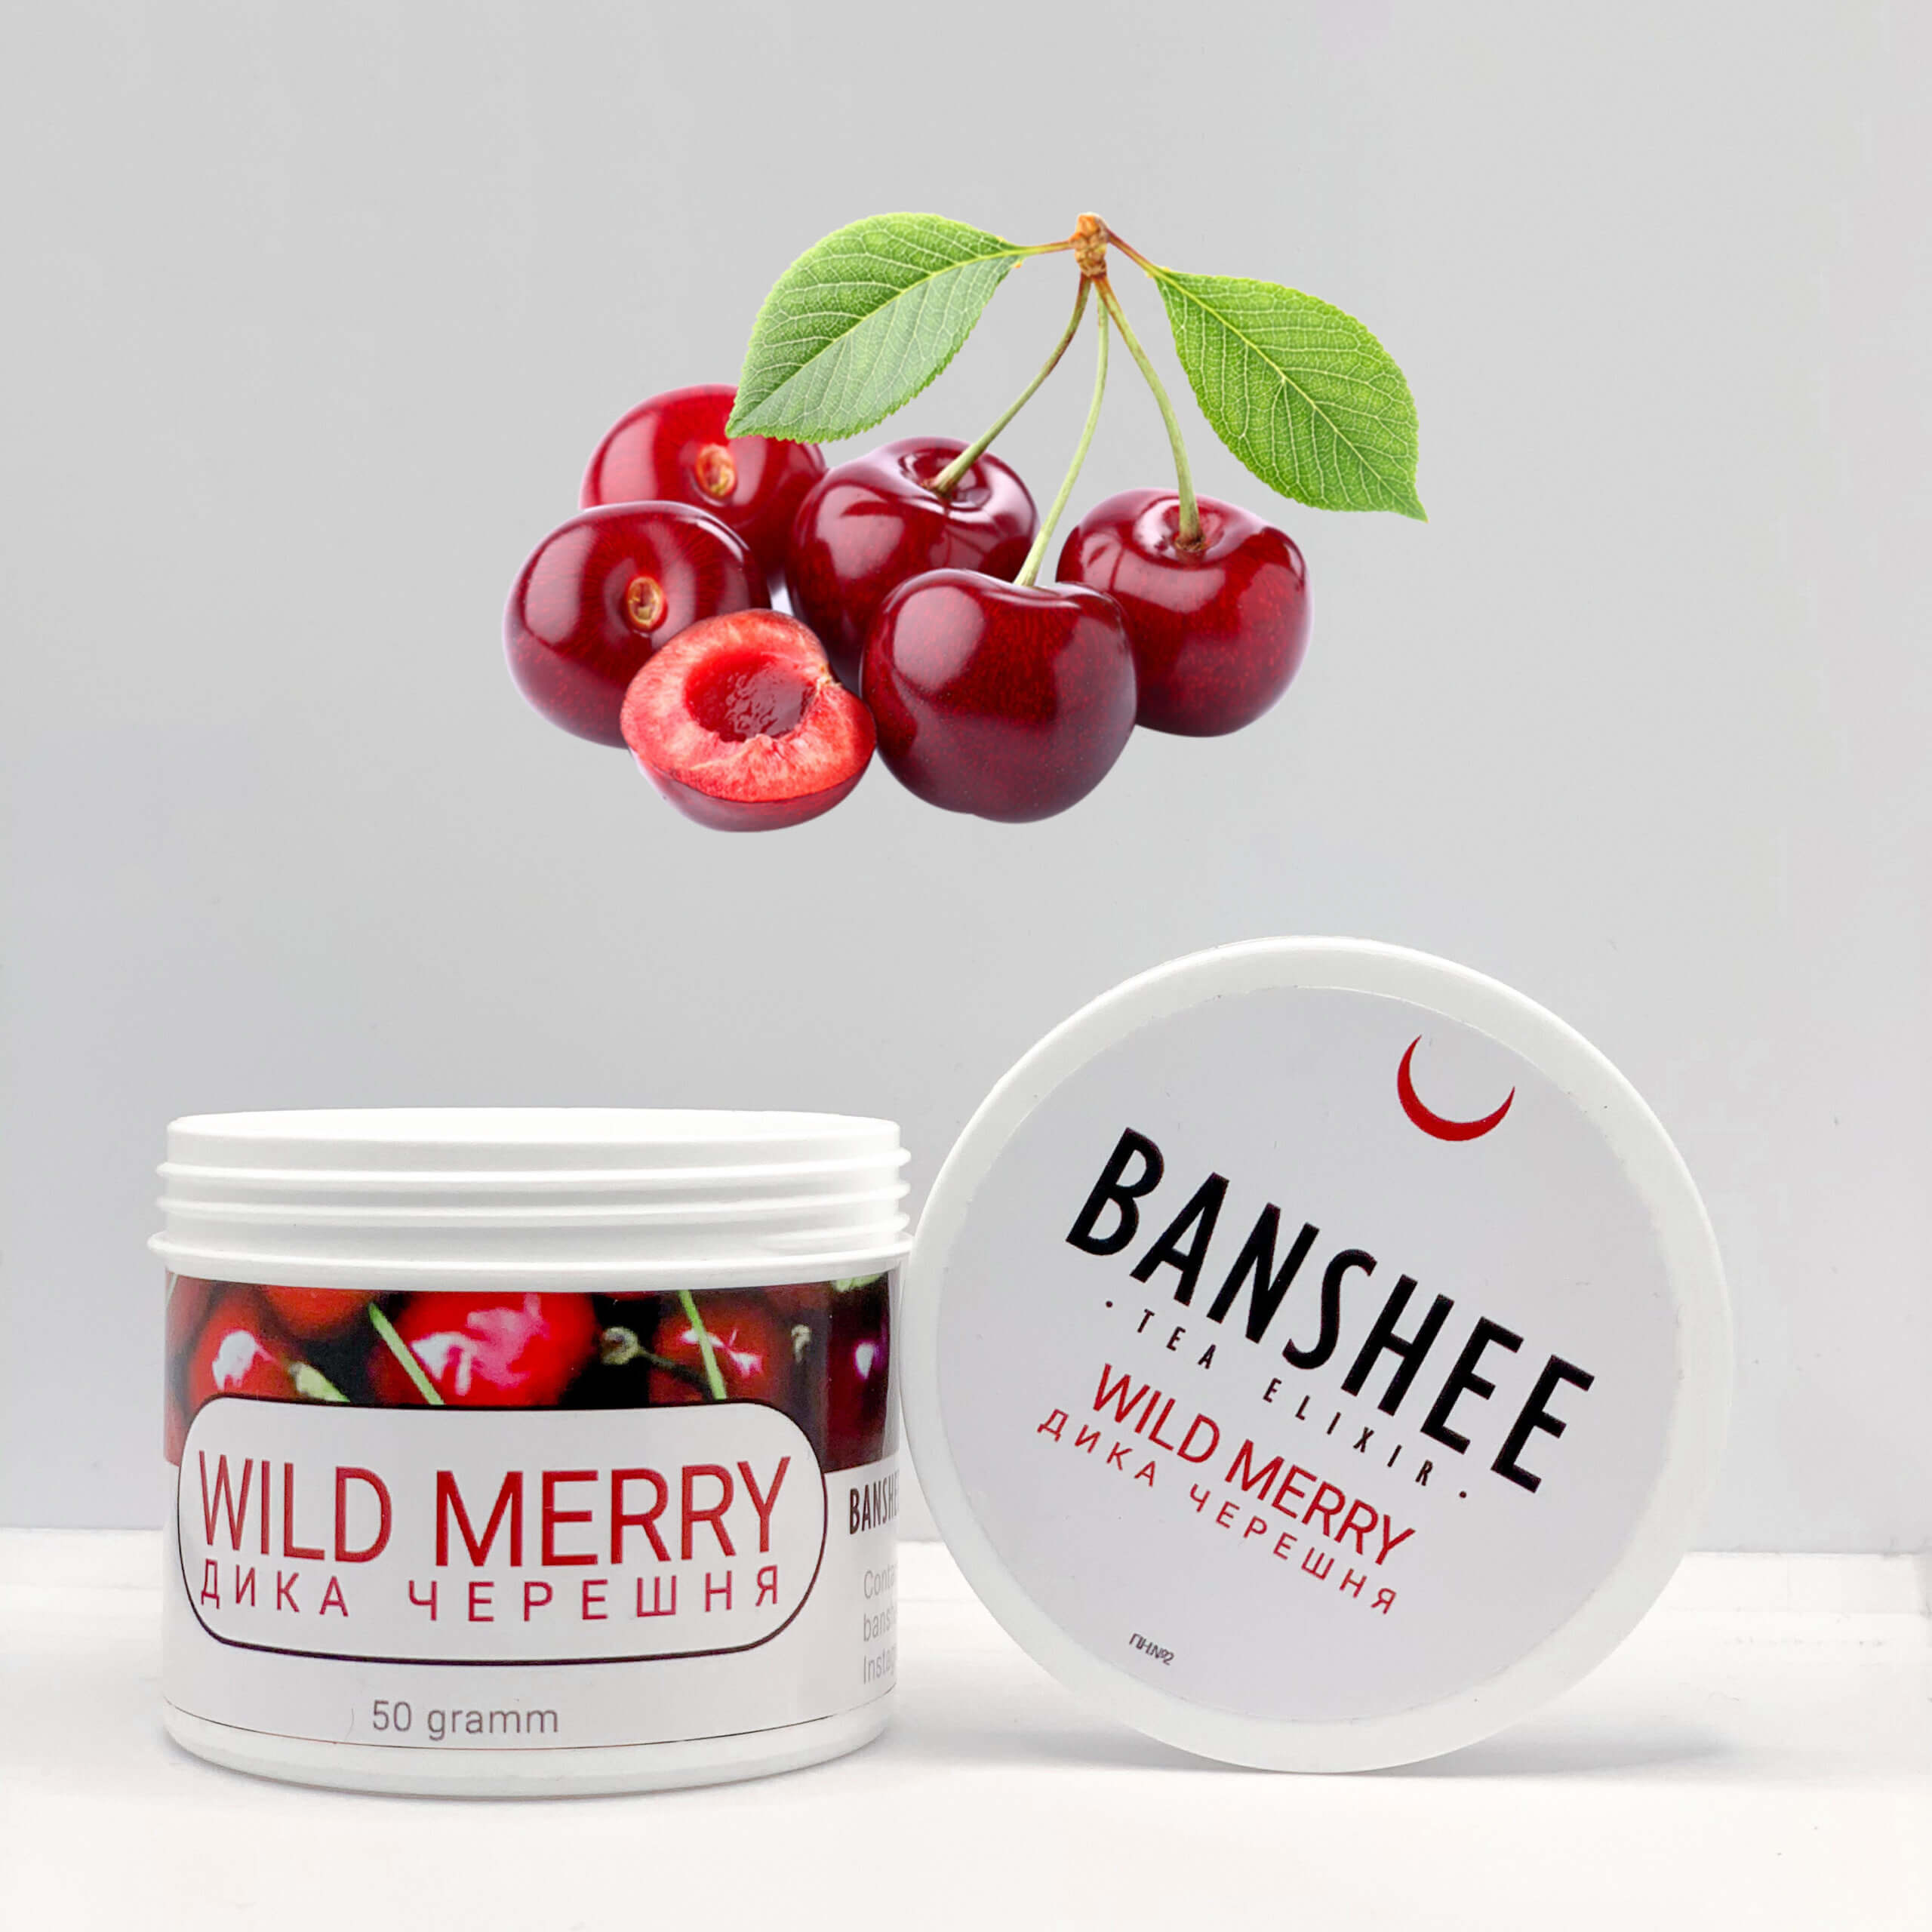 Тютюн Banshee Wild Merry - Дика черешня